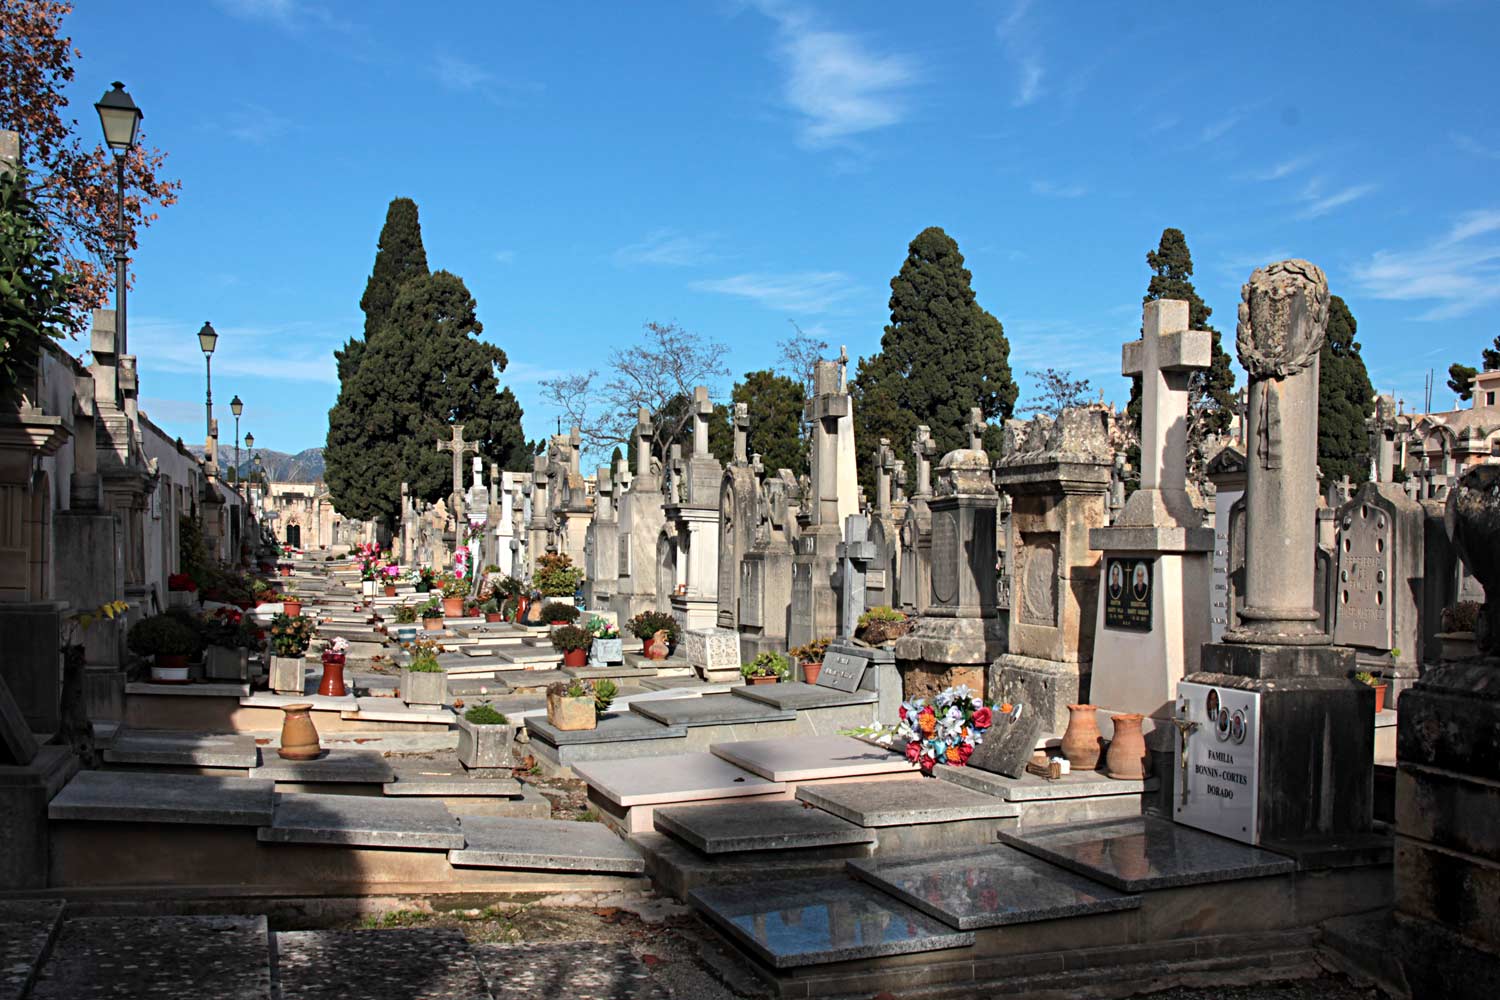 “Cementerio Municipal” in Palma de Mallorca